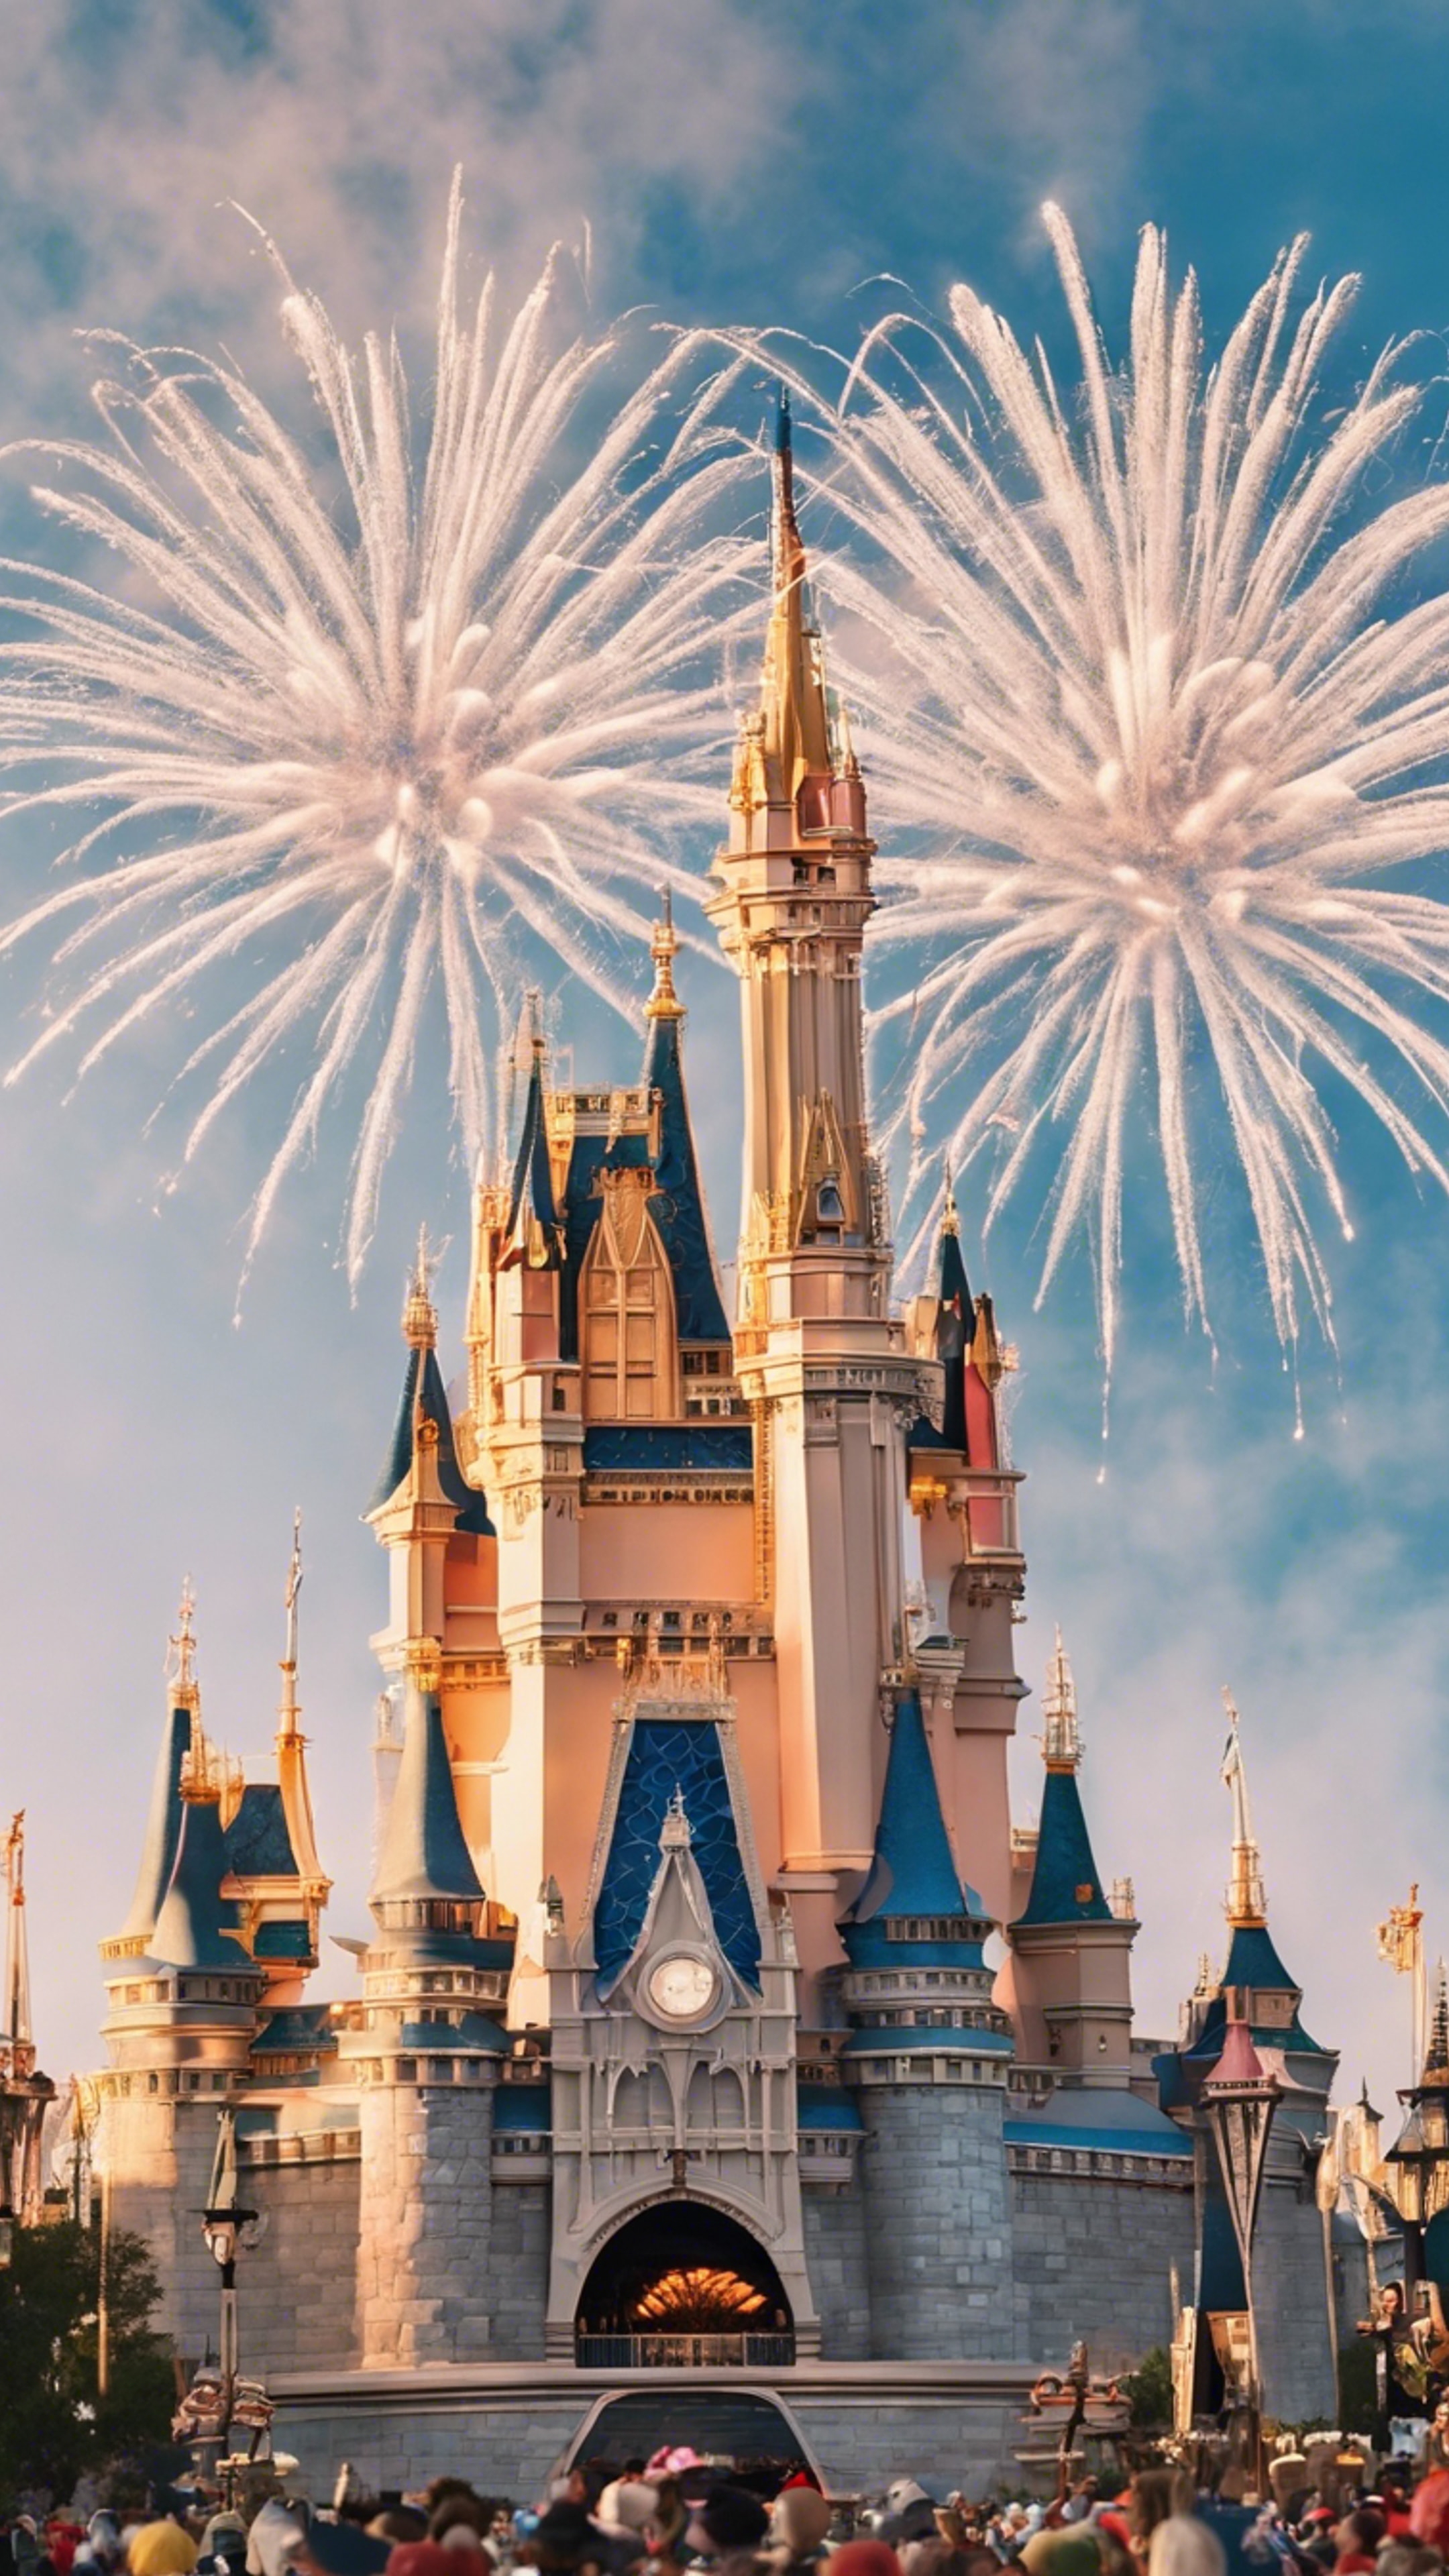 A dazzling firework display over Disney's Magic Kingdom, as seen from the Main Street U.S.A. کاغذ دیواری[06ea505dccb744c89f0a]